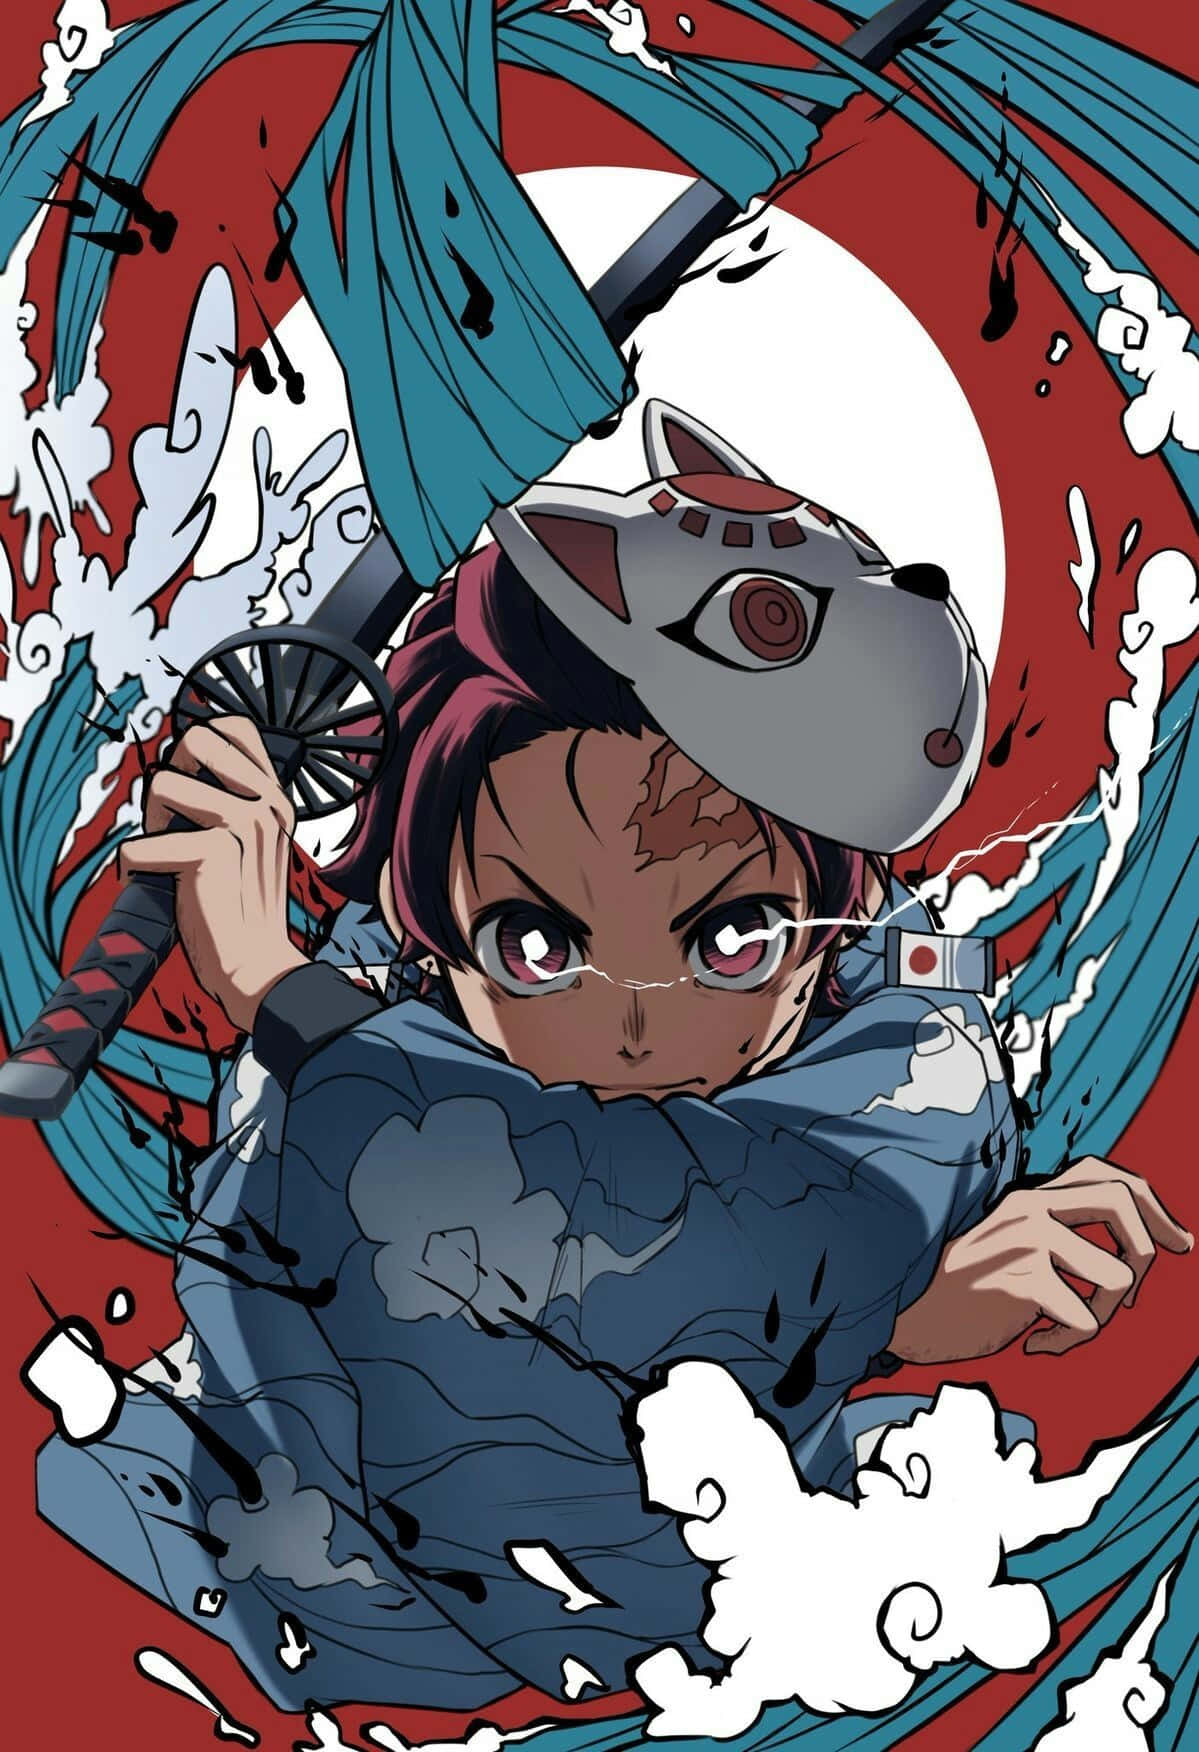 Tanjirooch Inosuke Står Tillsammans Stolta I Demon Slayer Manga På Dator- Eller Mobilbakgrund. Wallpaper